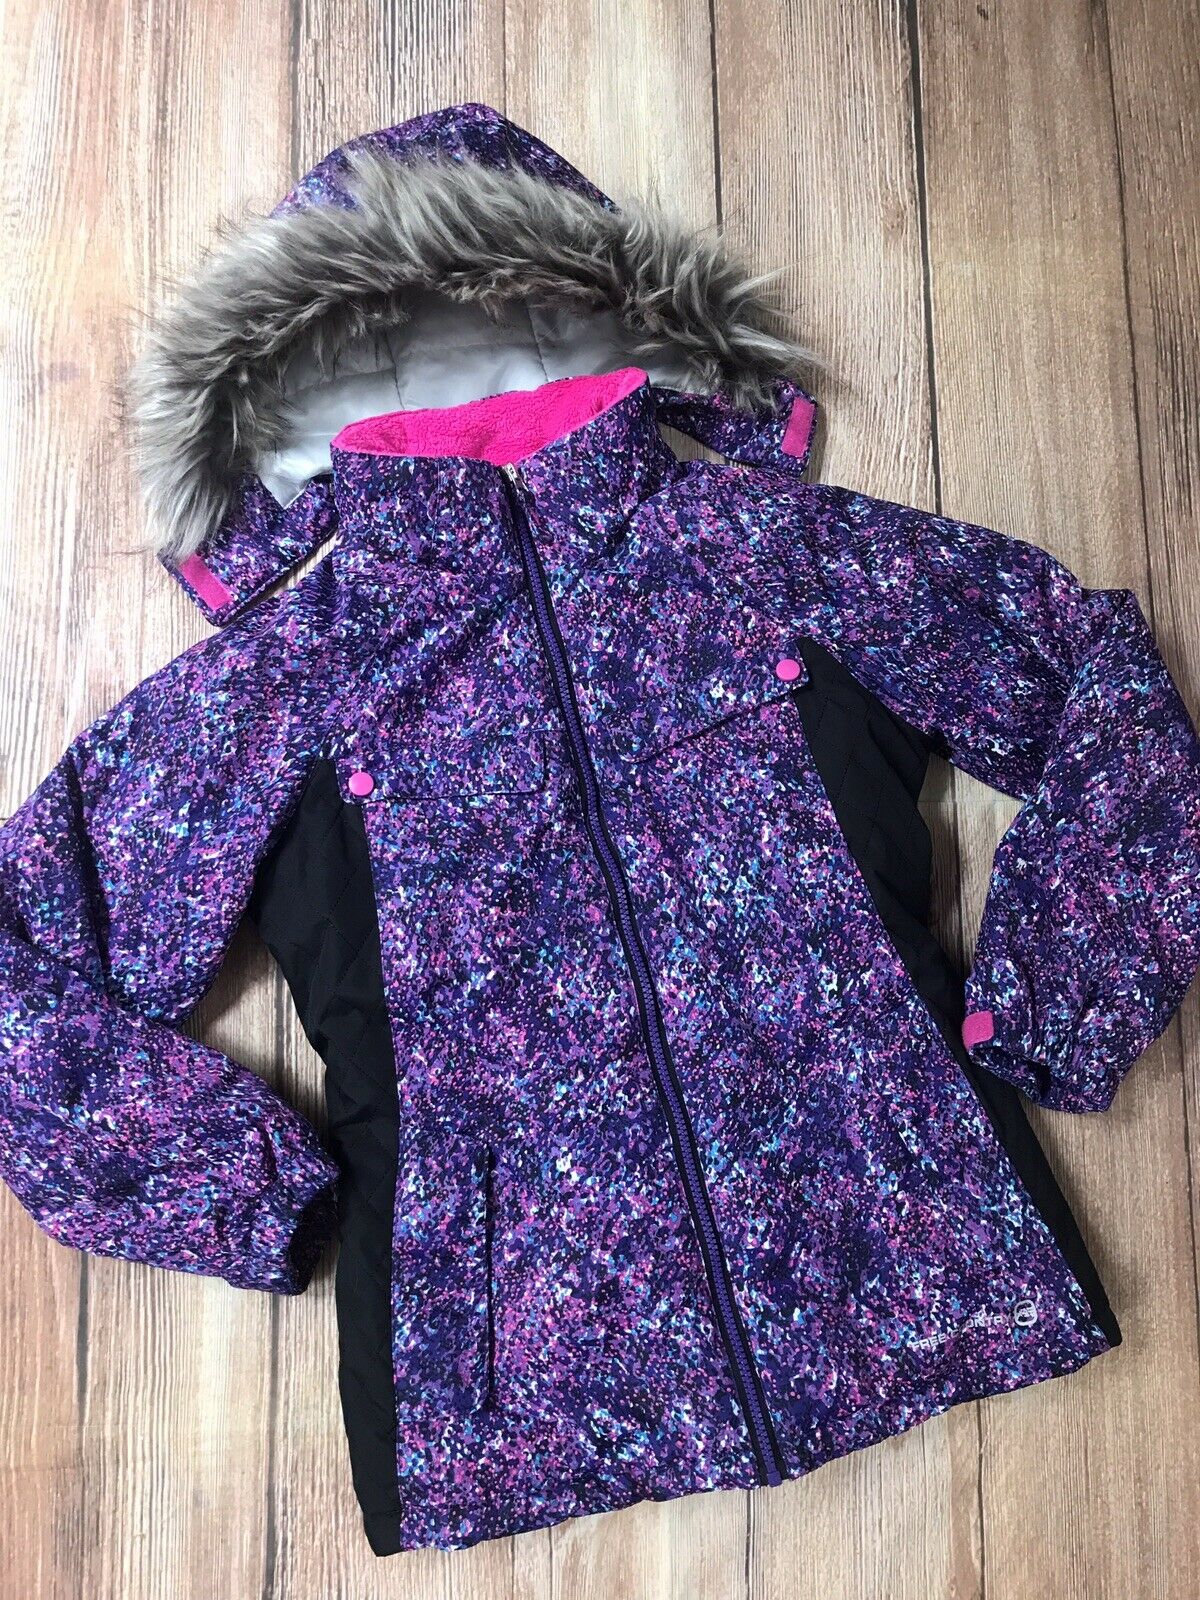 Free Country Girls Snow Ski Jacket Coat Size L 14 Fur Hooded Purple Euc